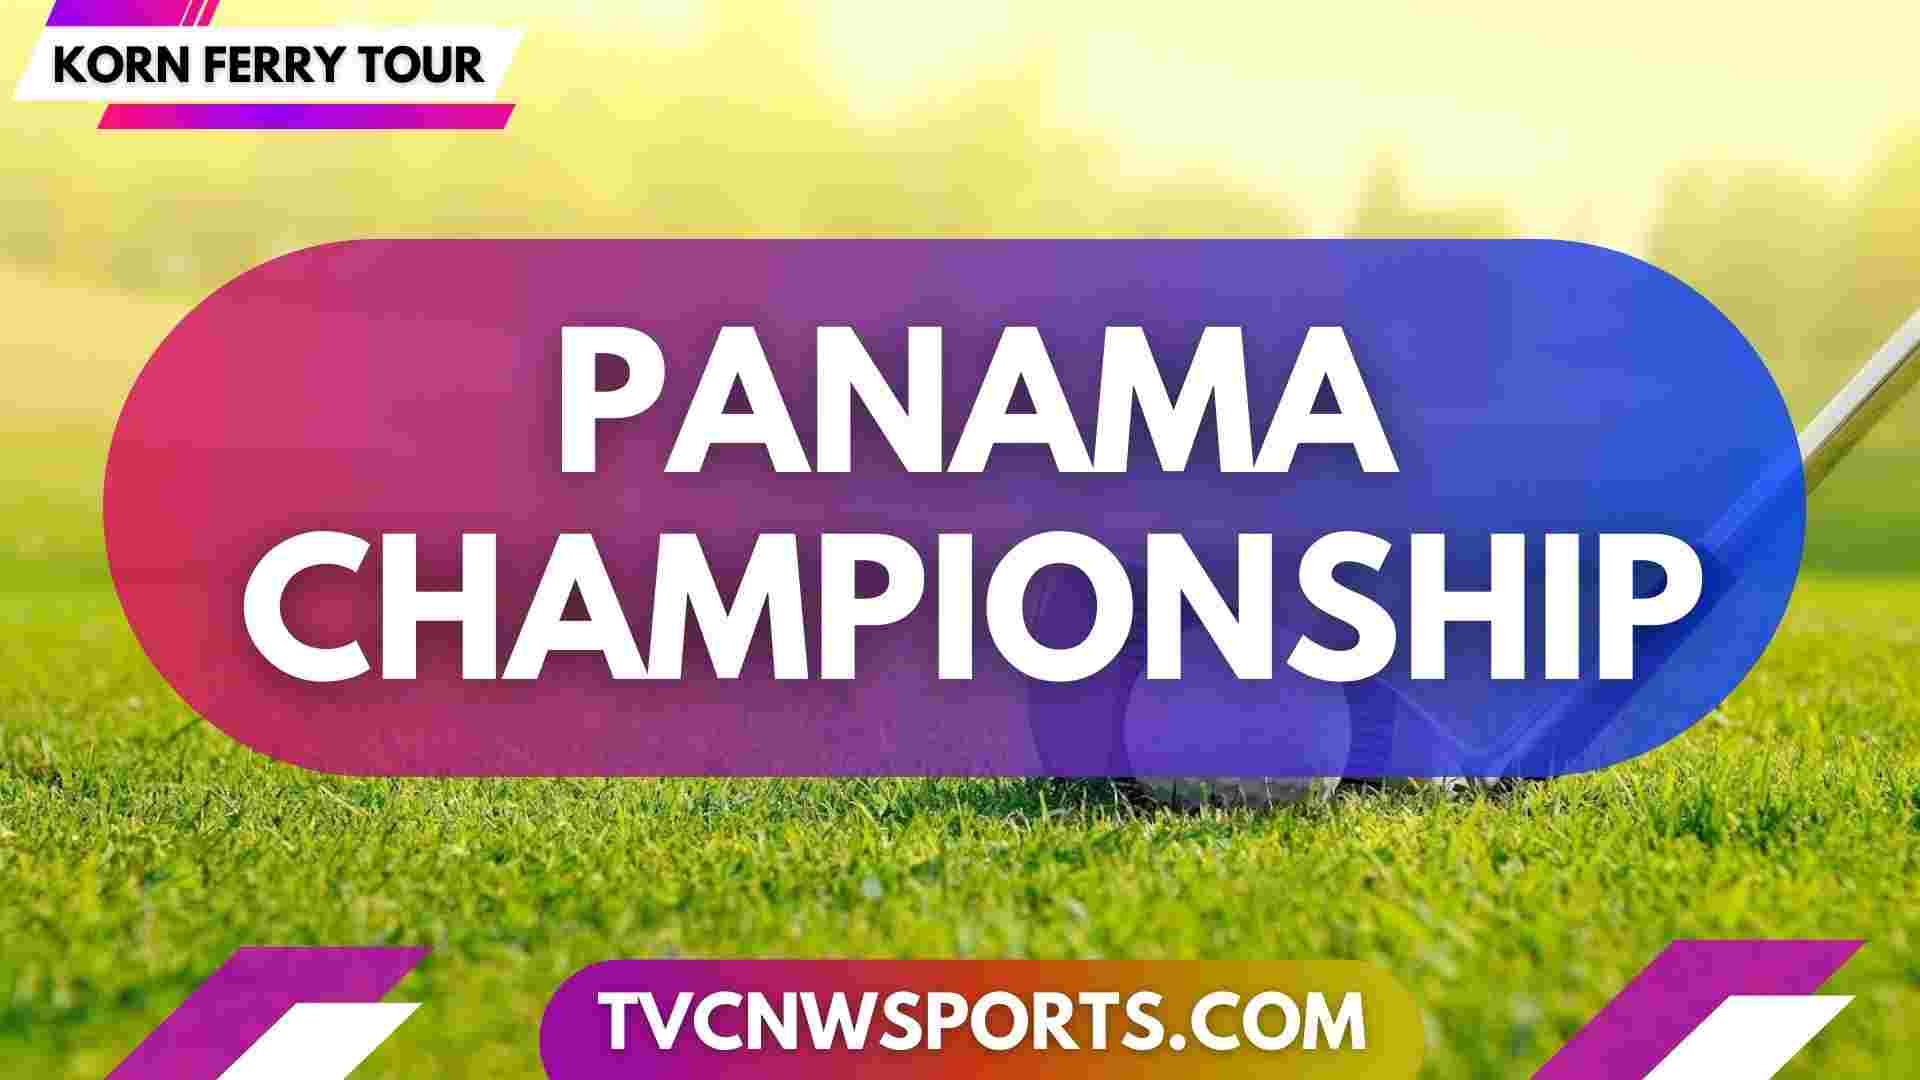 Panama Championship Korn Ferry Golf